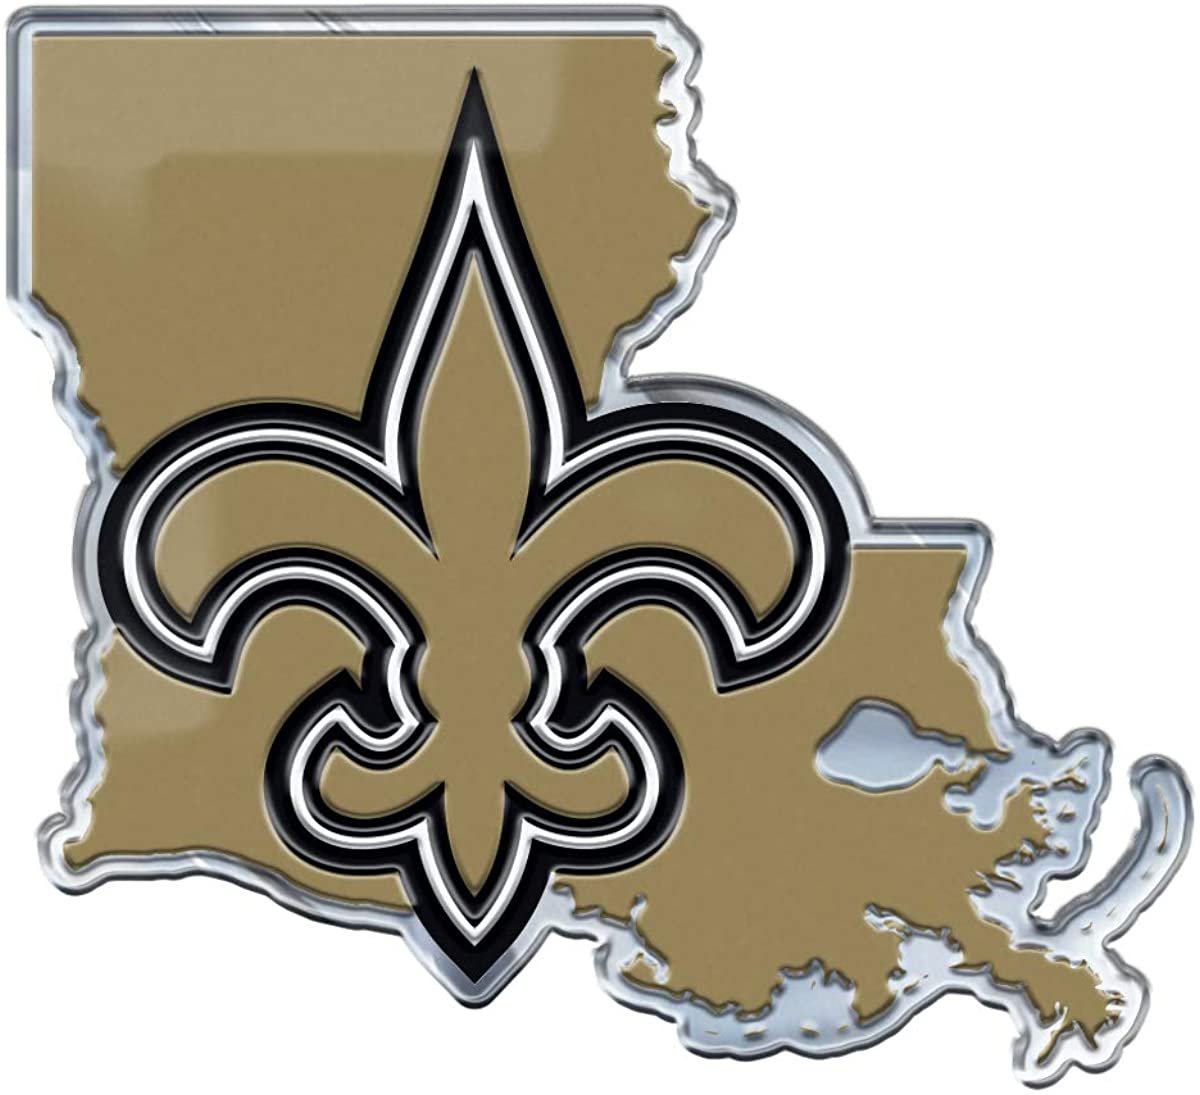 New Orleans Saints Team State Design Auto Emblem, Aluminum Metal, Embossed Team Color, Raised Decal Sticker, Full Adhesive Backing